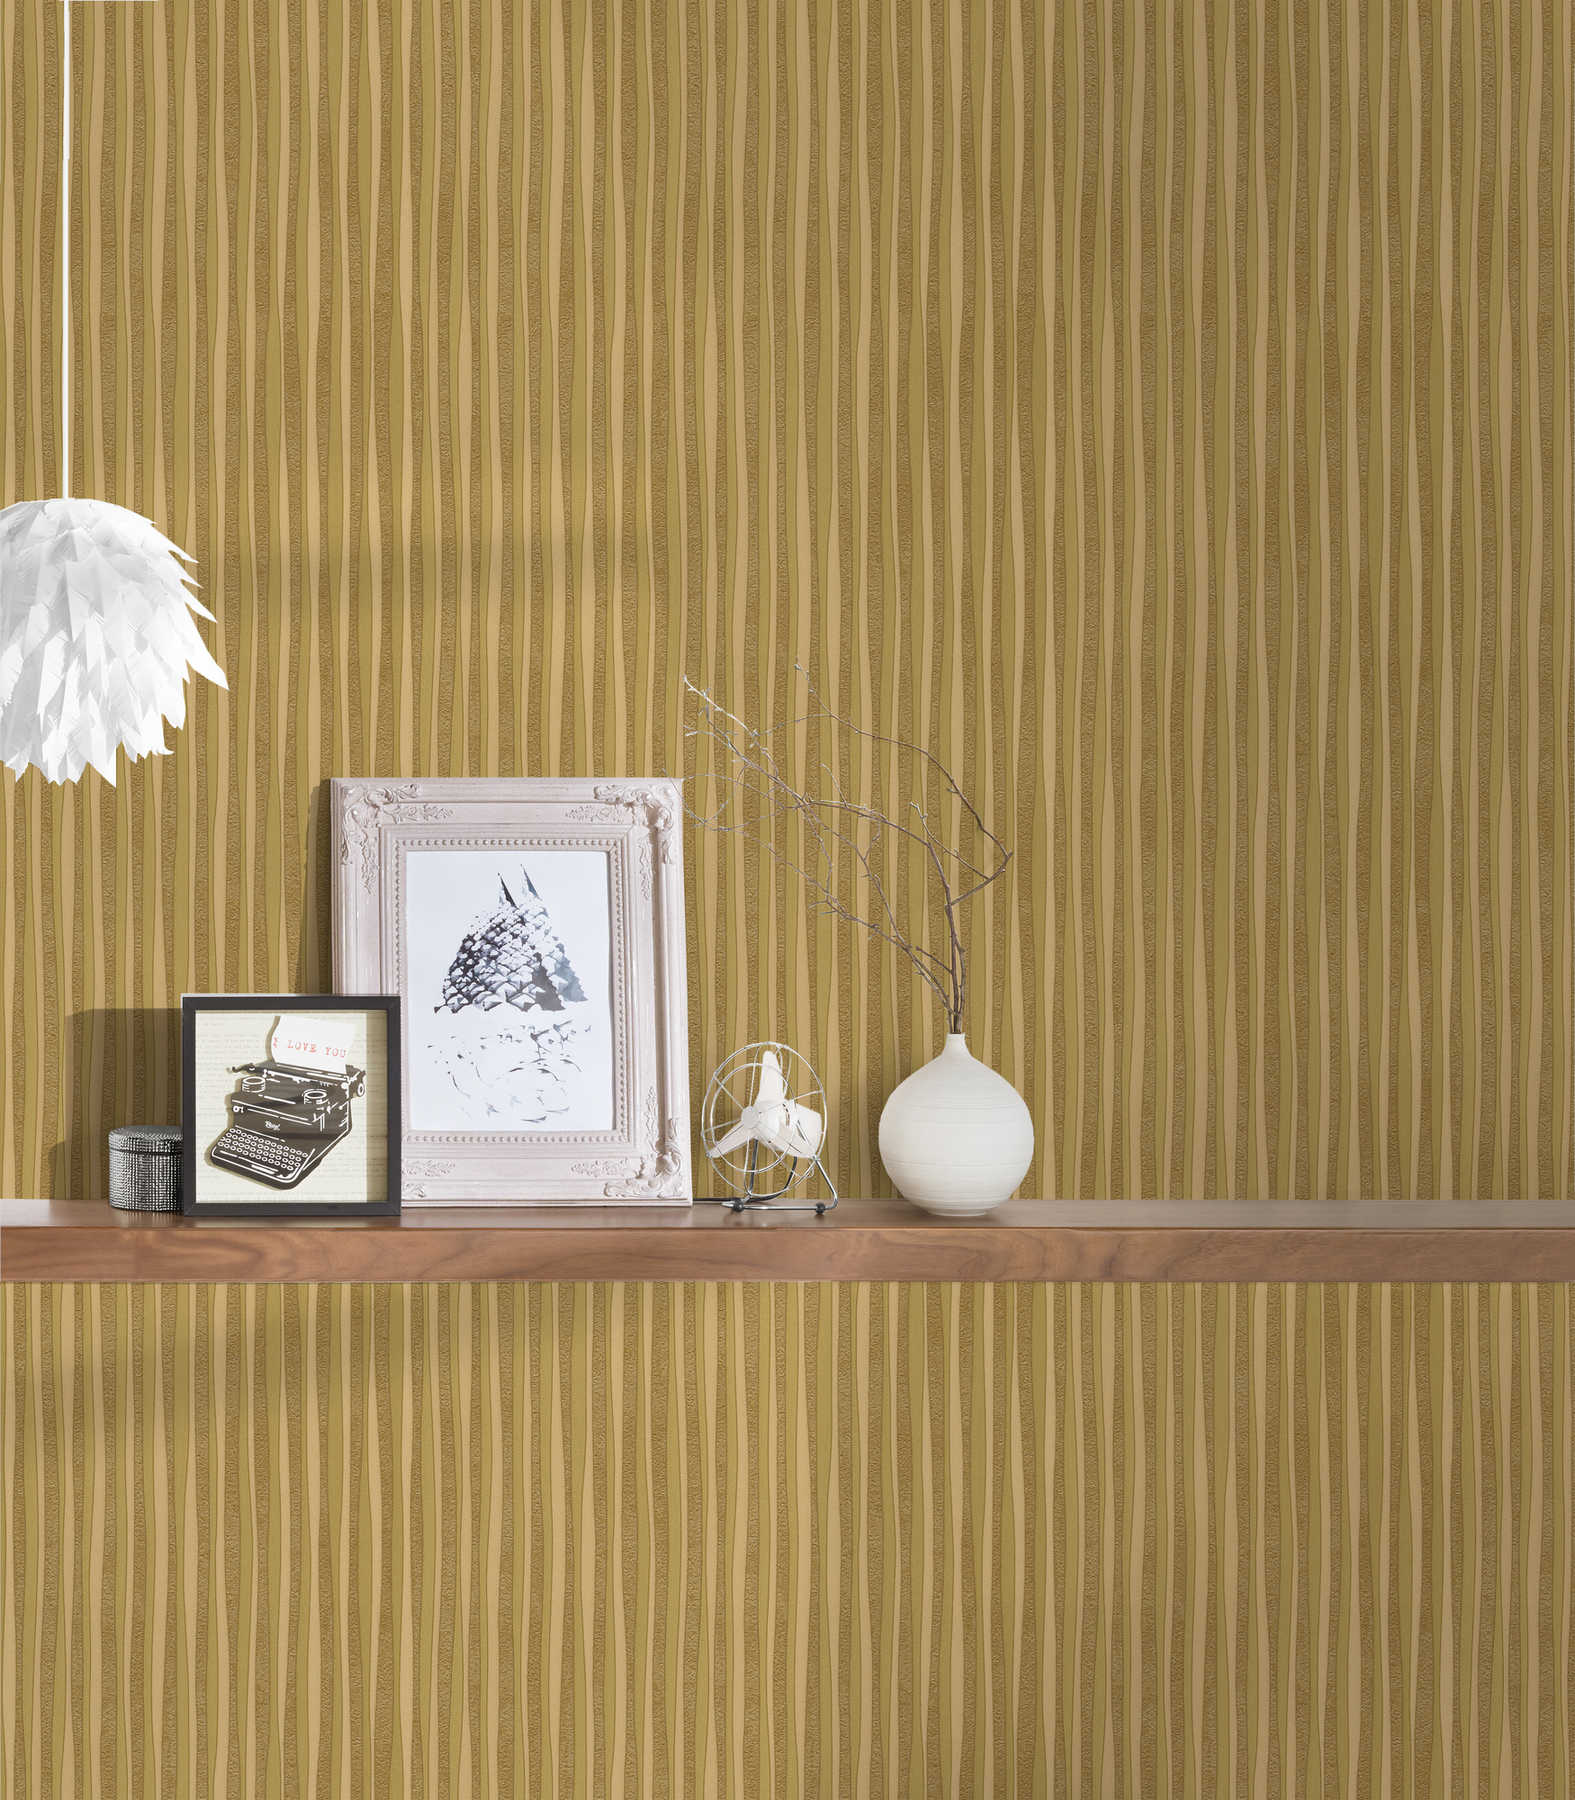             Metallic design wallpaper with line pattern in gold - metallic
        